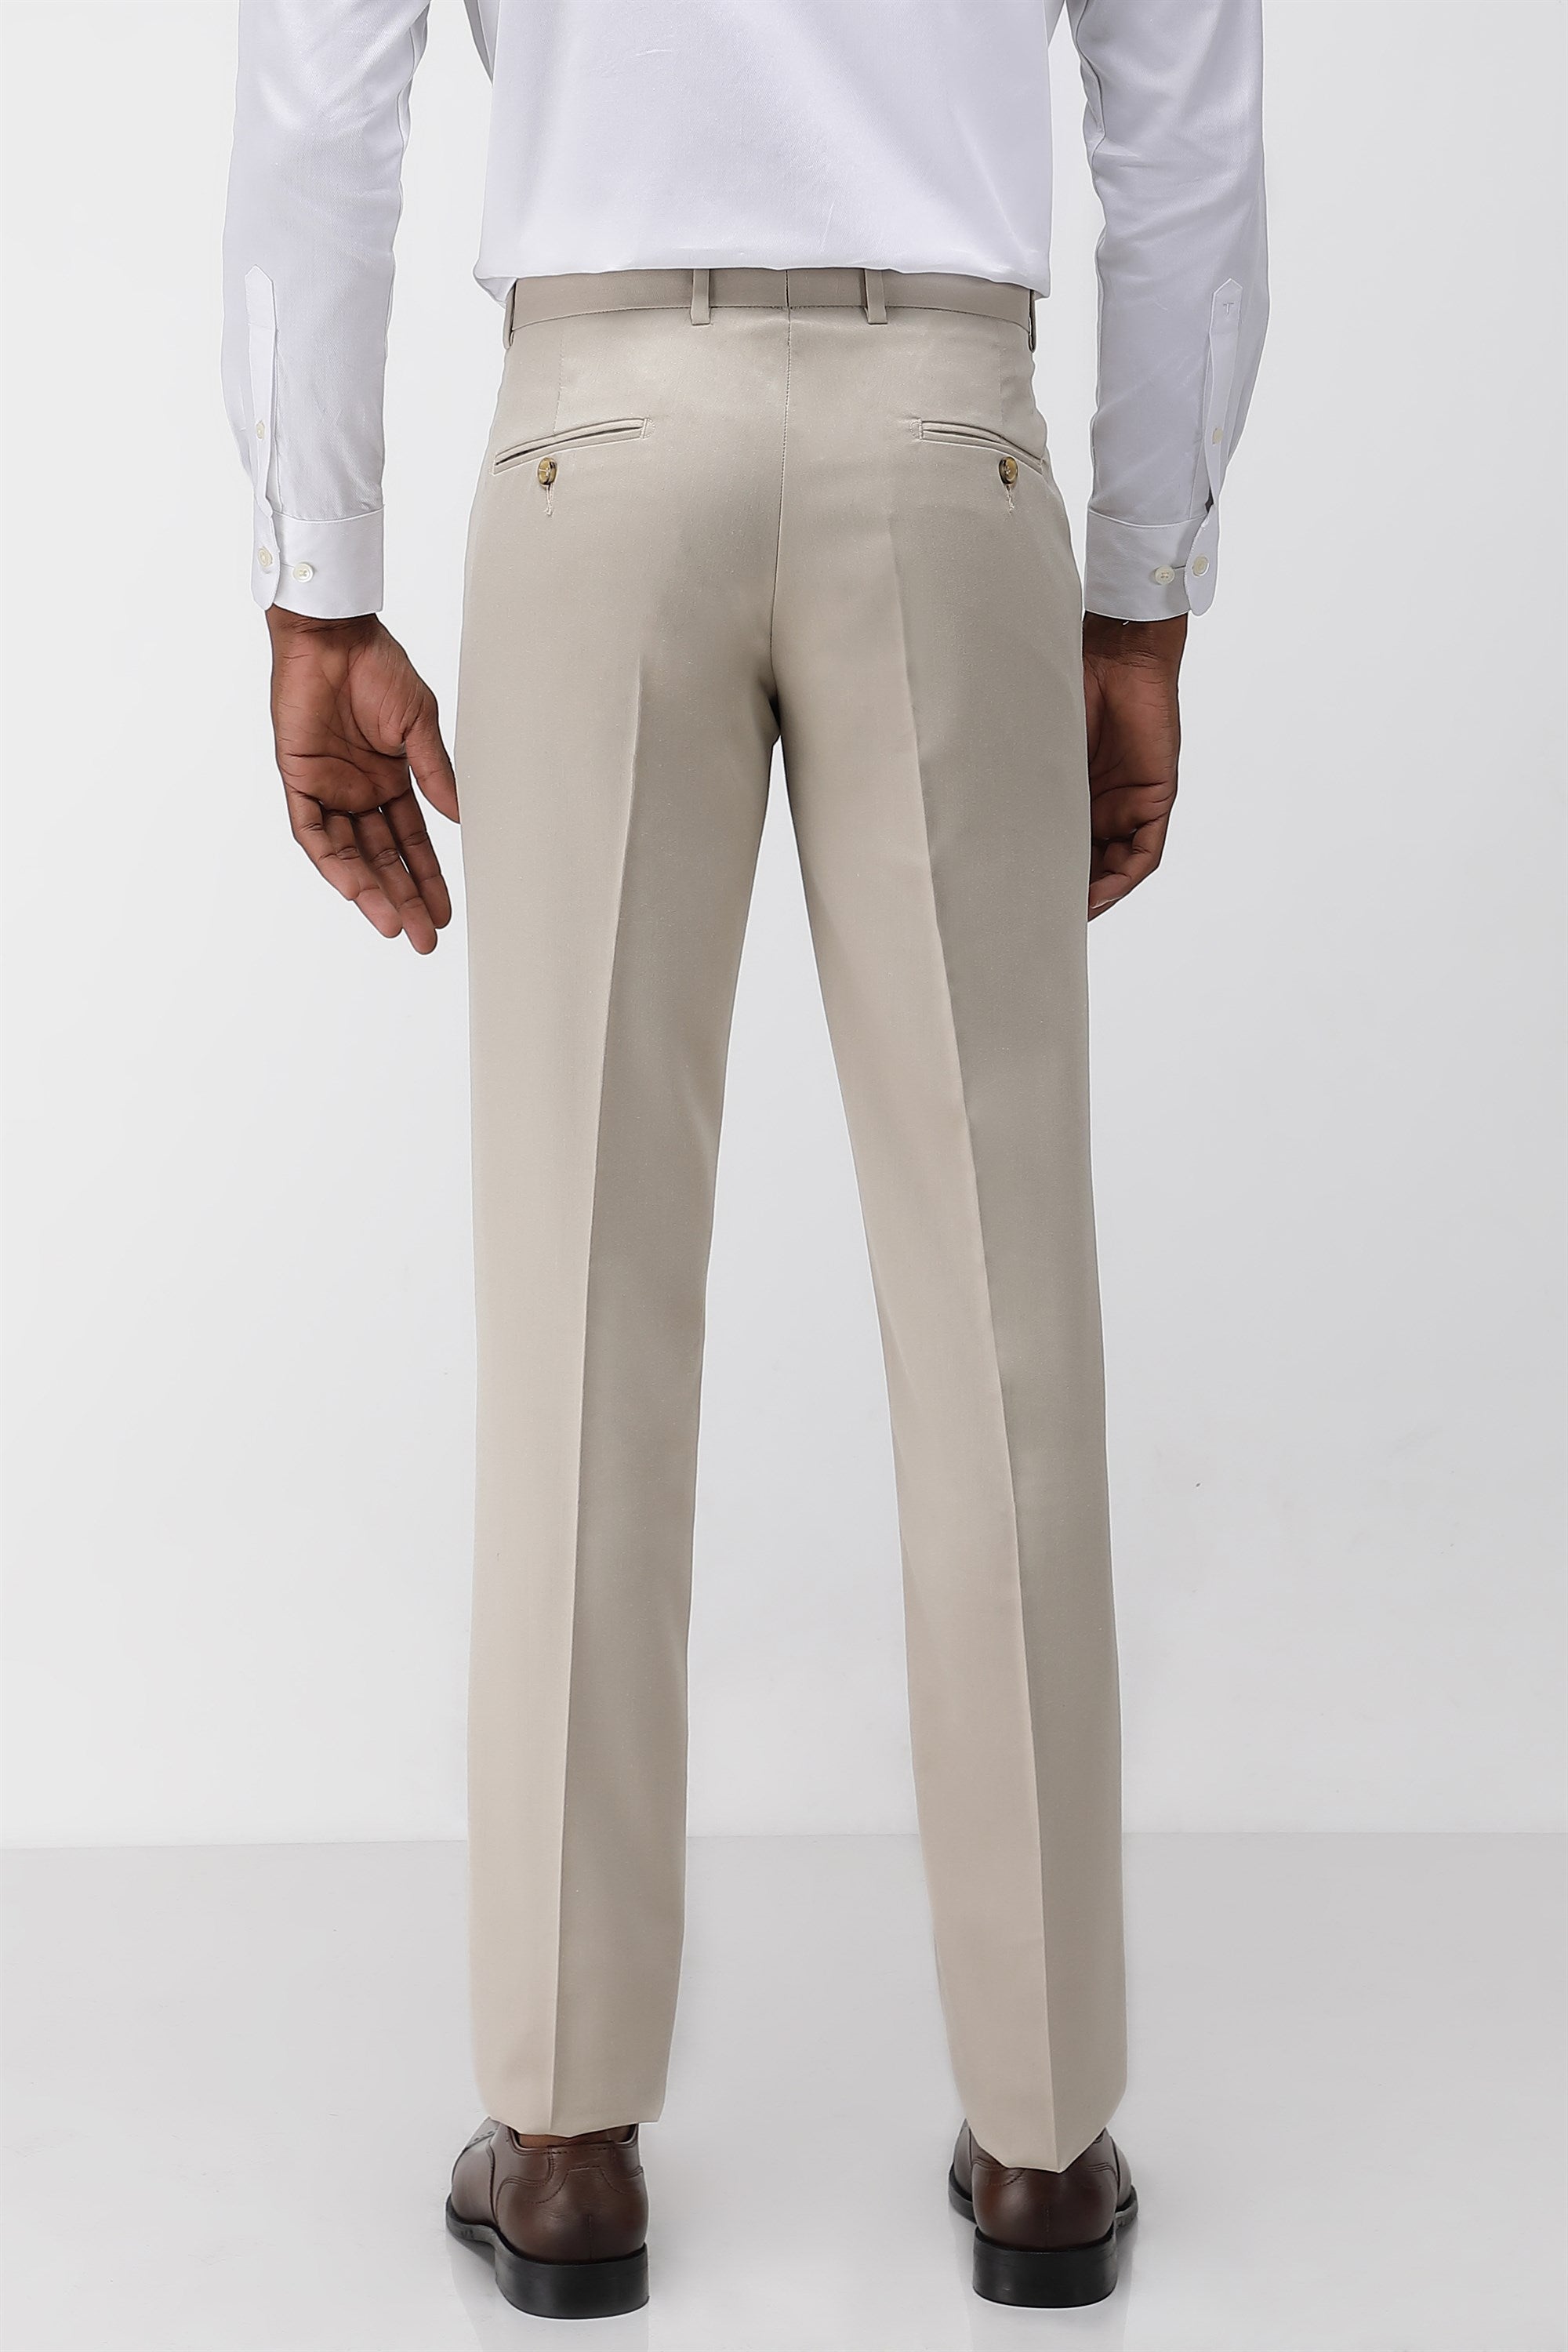 Amazon Brand - INKAST Men's Straight Casual Trousers  (INKJG-TO-001_Khaki_28W x 29L) : Amazon.in: Fashion